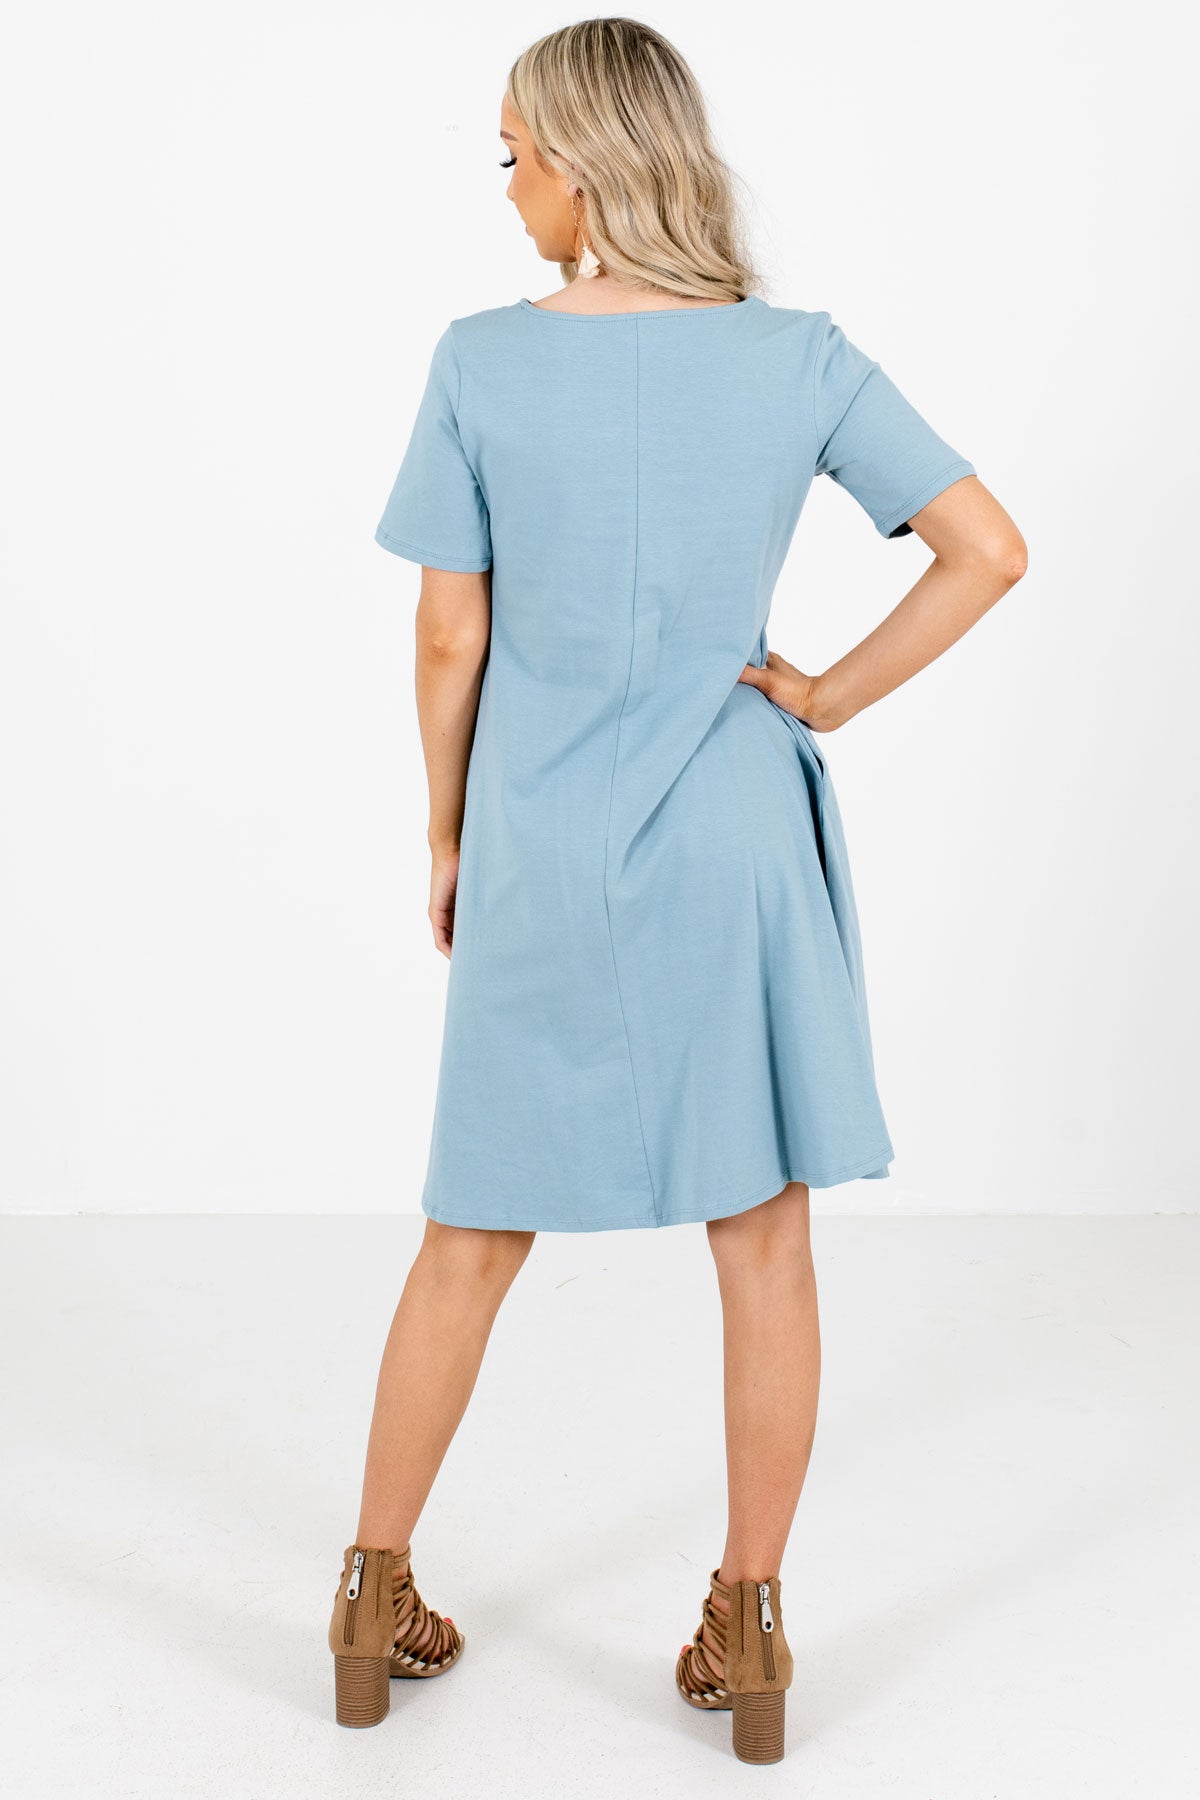 Women's Blue Short Sleeve Boutique Knee-Length Dress